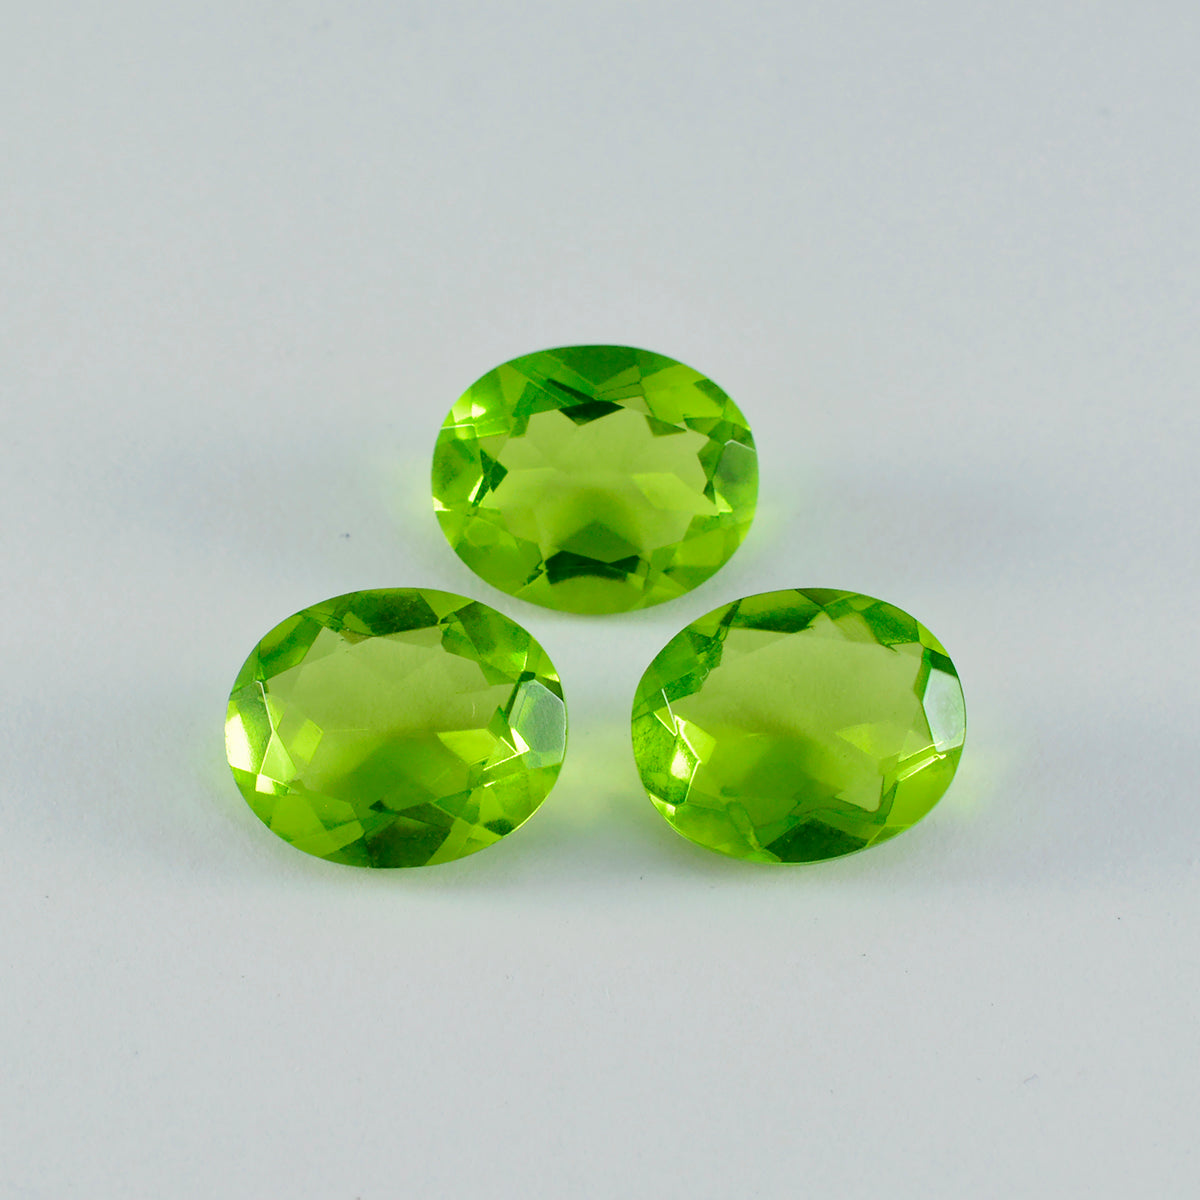 Riyogems 1 Stück grüner Peridot, CZ, facettiert, 12 x 16 mm, ovale Form, hübscher, hochwertiger, loser Edelstein